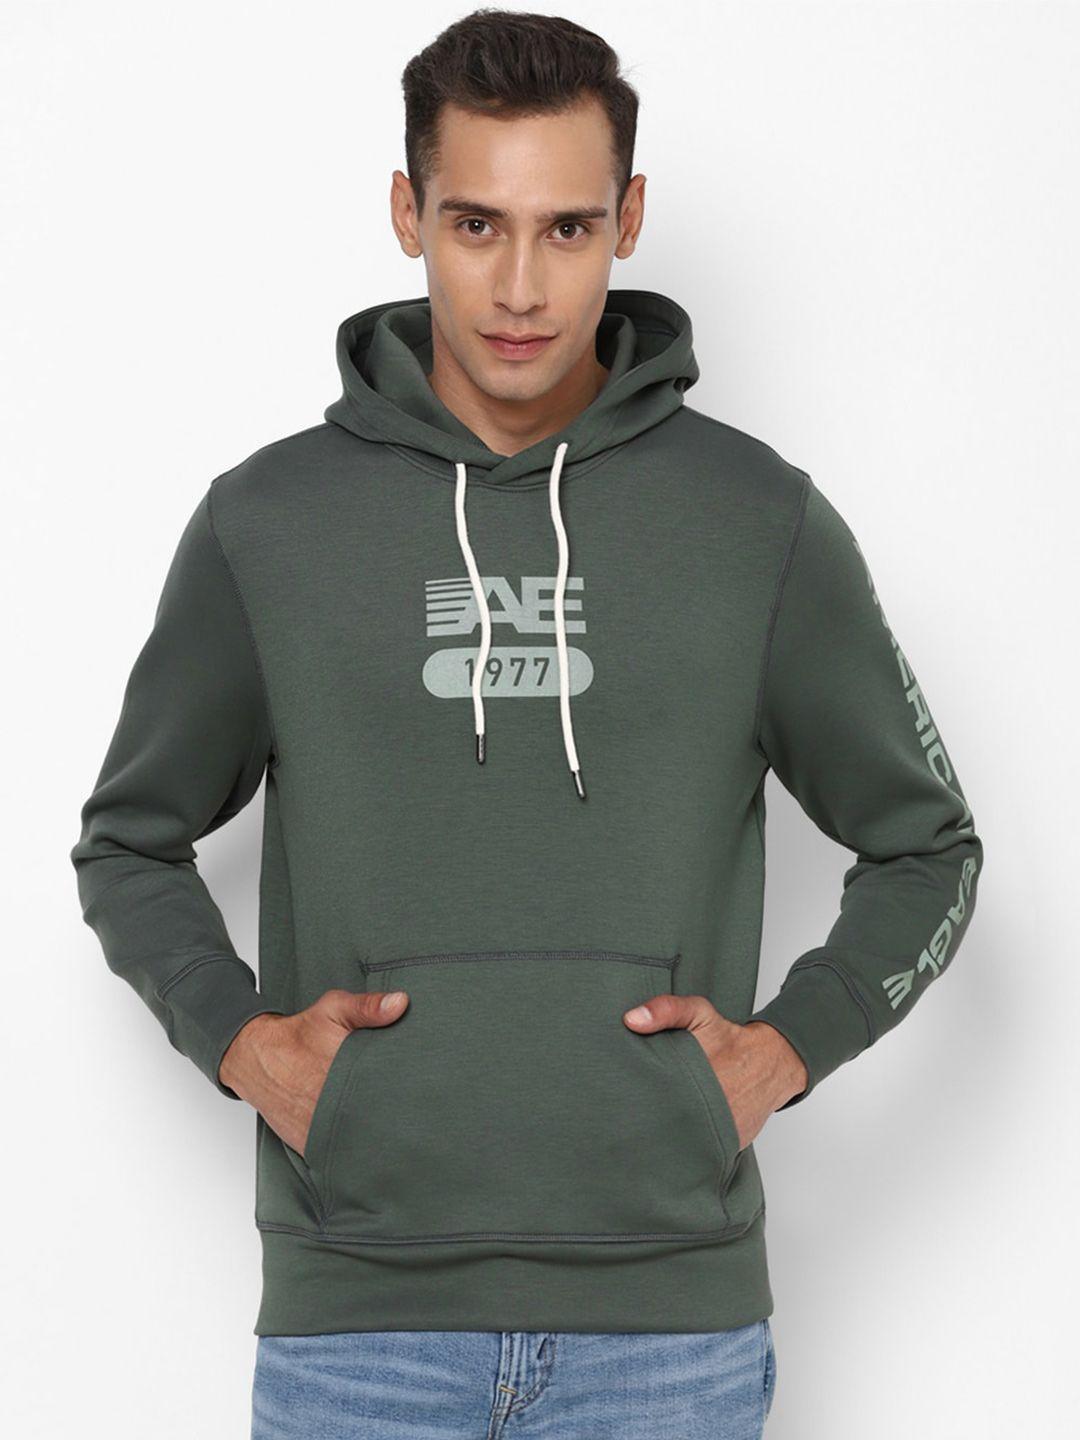 american-eagle-outfitters-men-hooded-sweatshirt